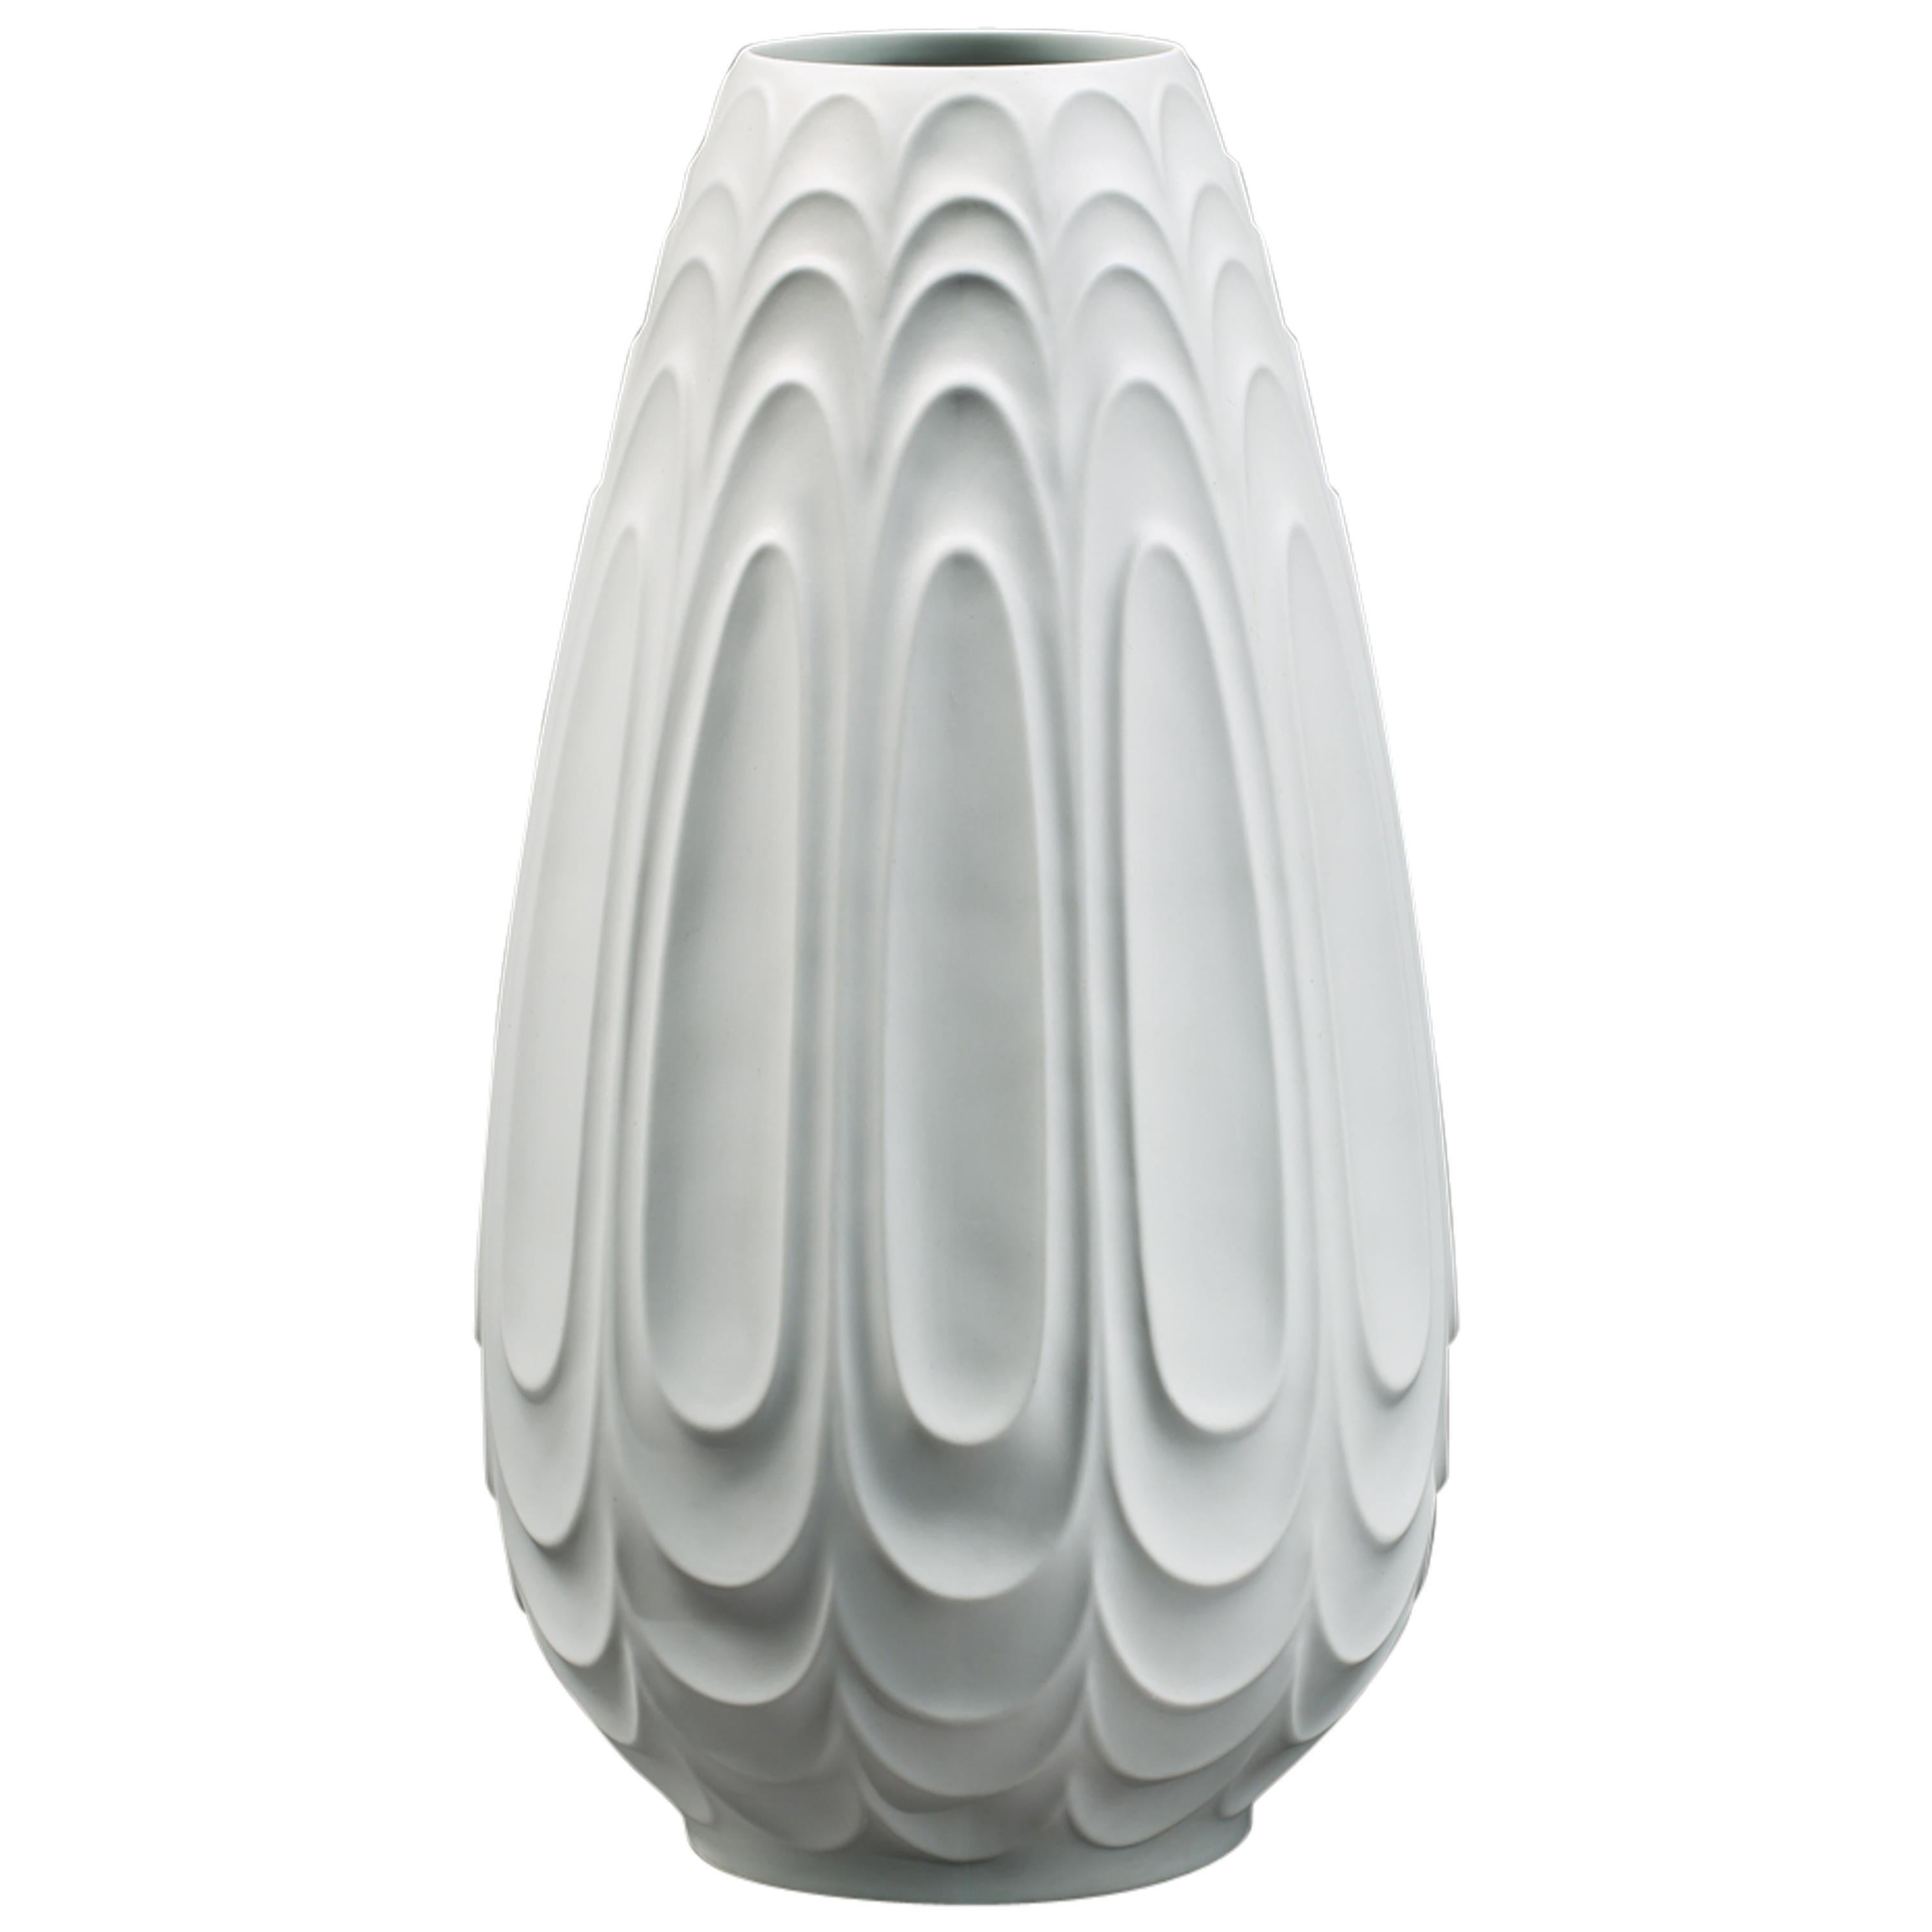 Heinrich Vase Urn Floor Standing White Sculpted Porcelain - Art by Heinrich & Co. 1